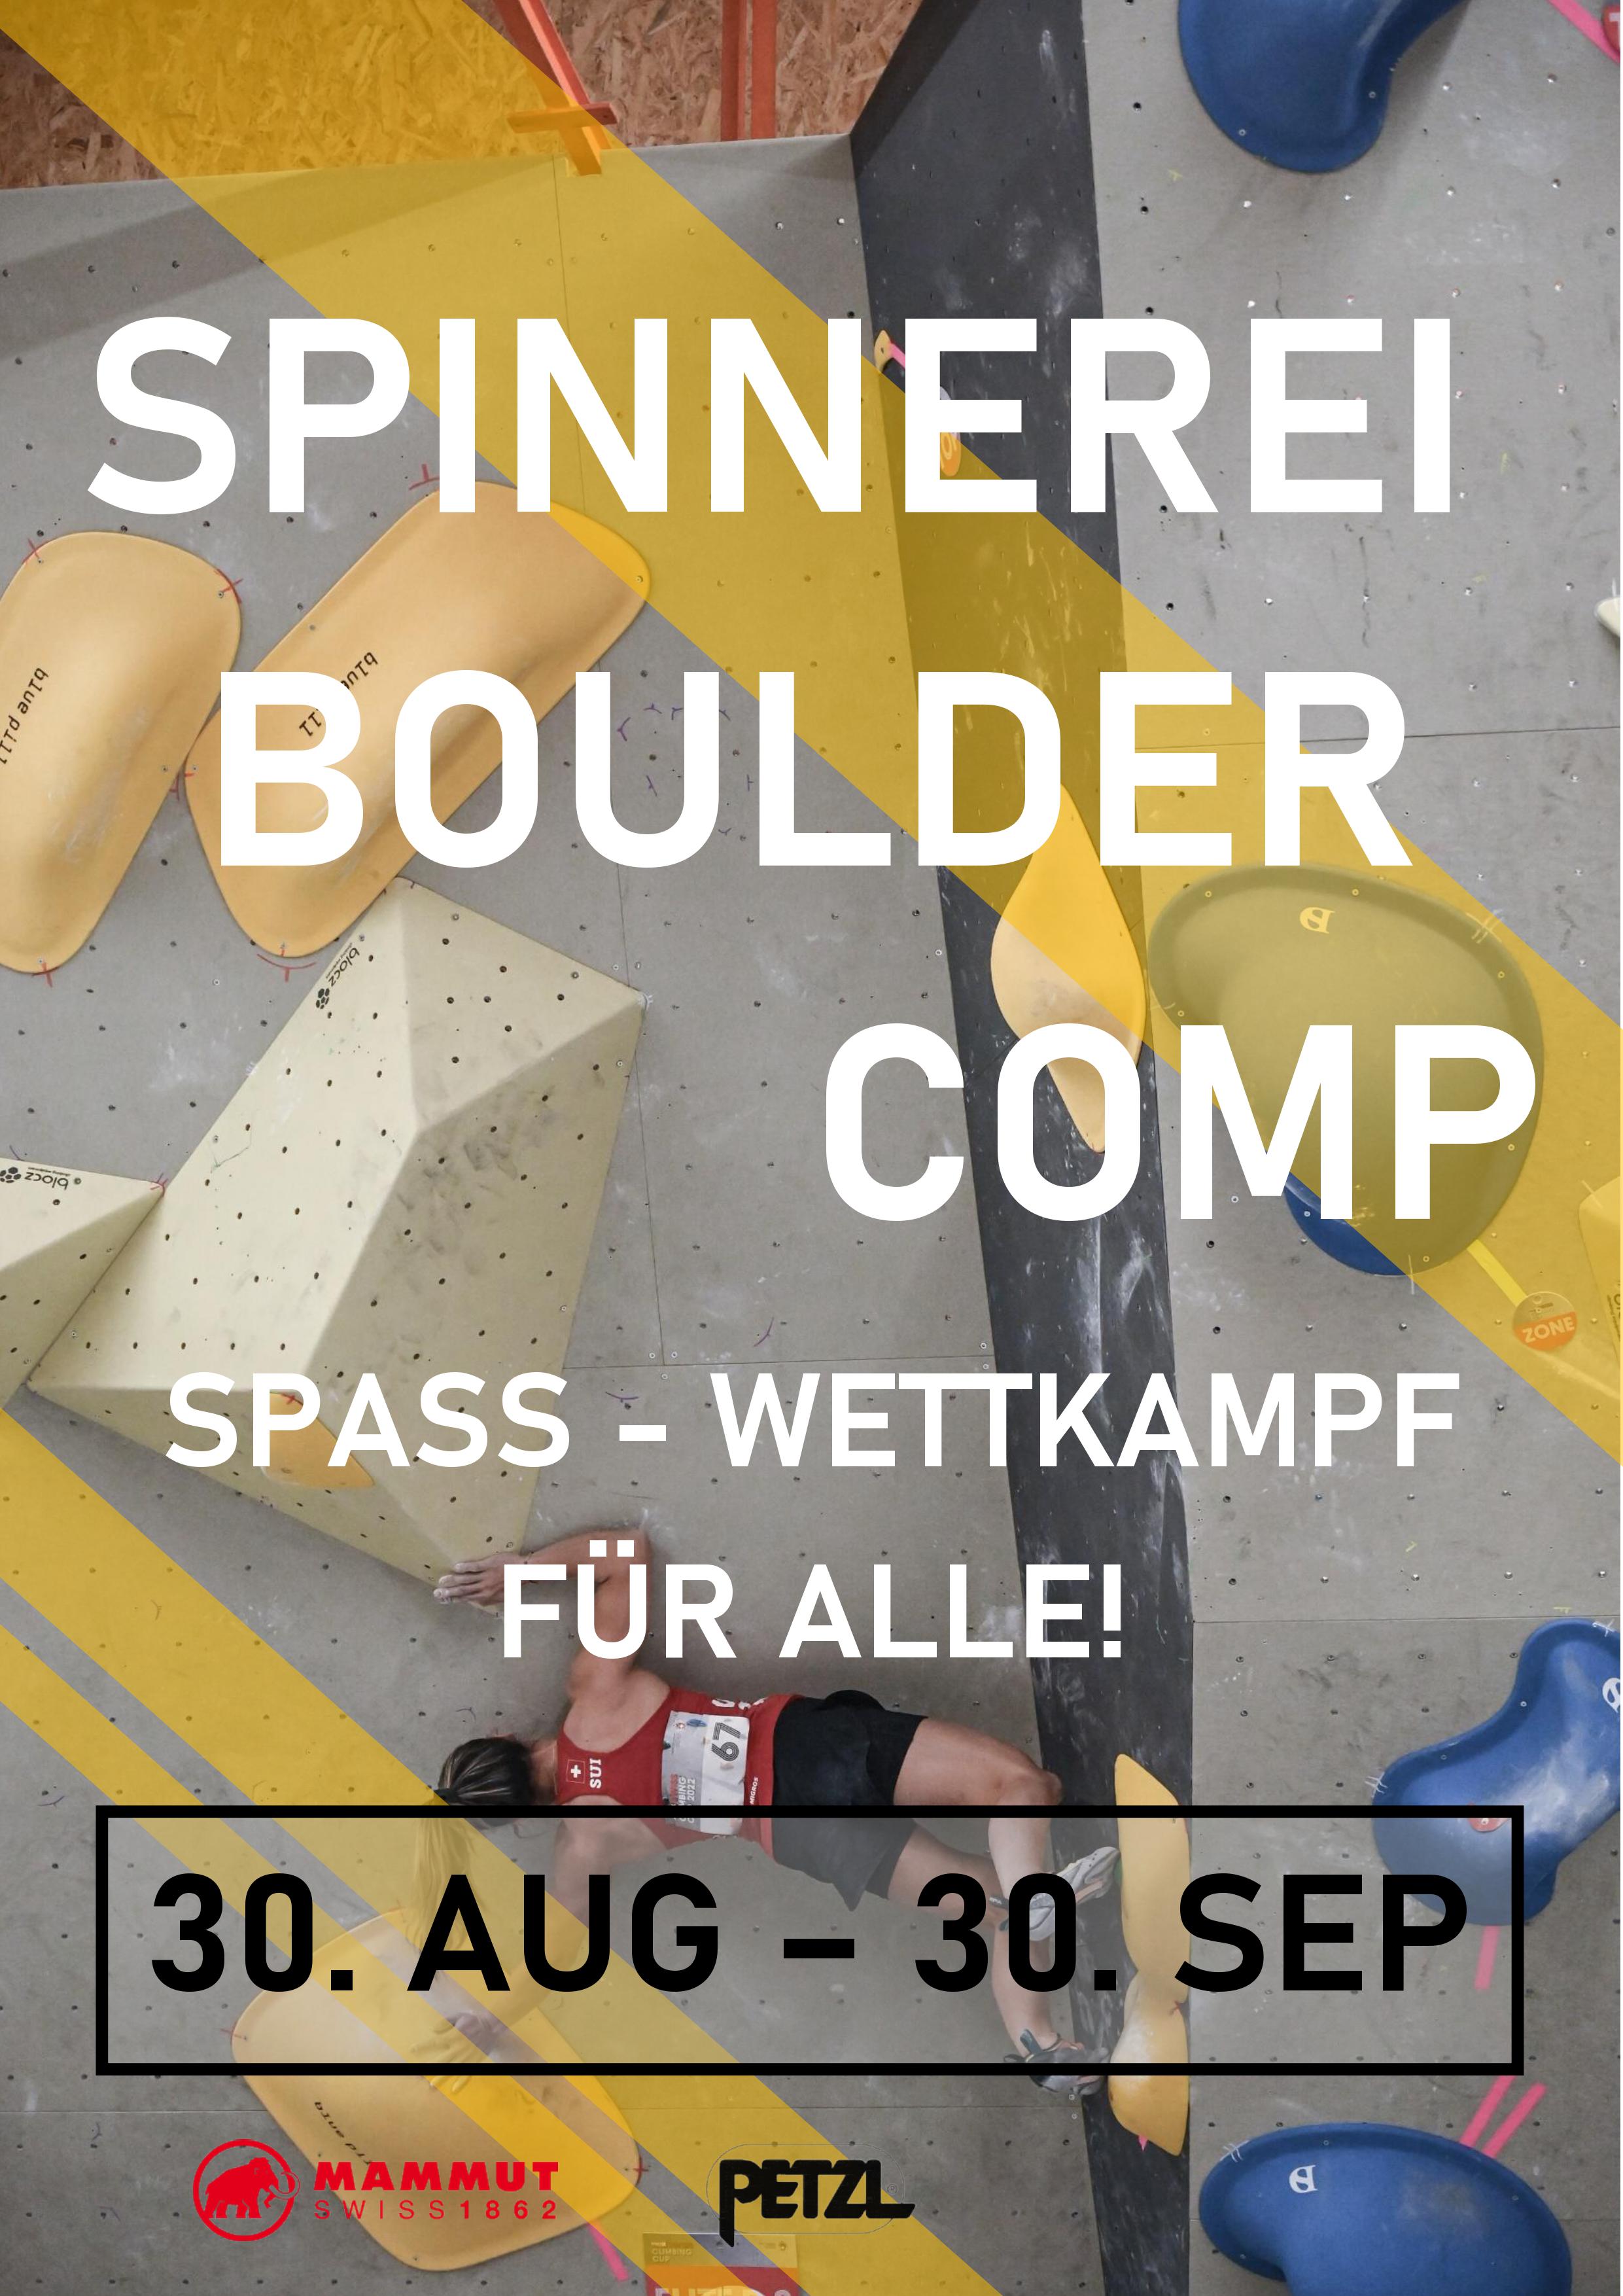 Sommer Comp Poster Insta 1